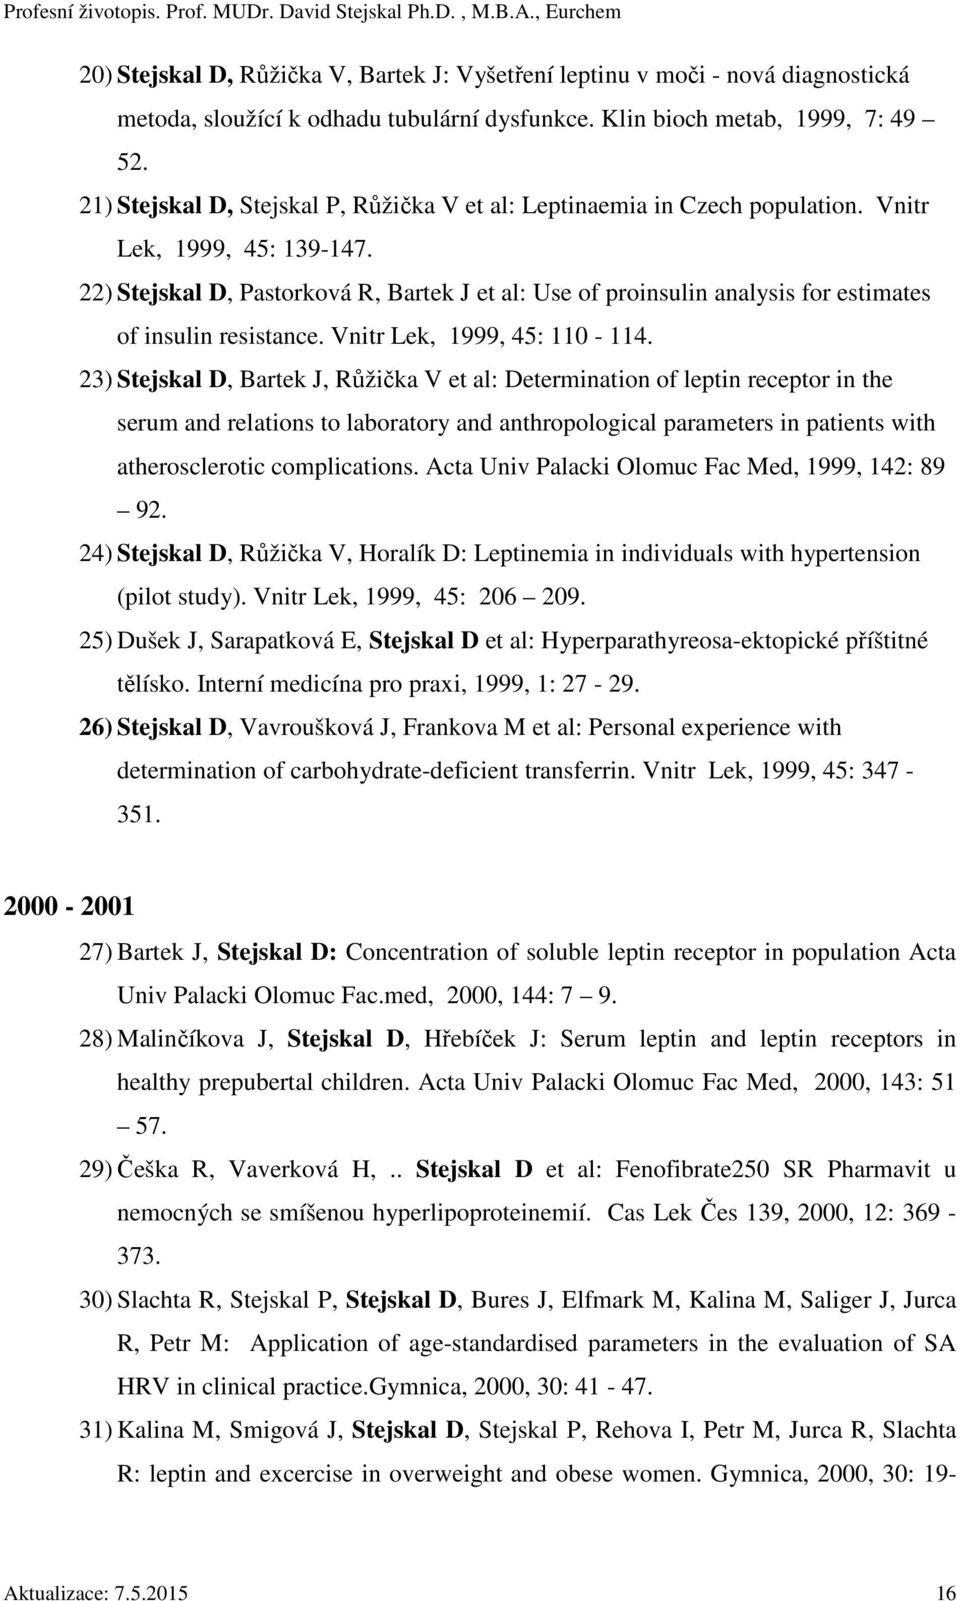 22) Stejskal D, Pastorková R, Bartek J et al: Use of proinsulin analysis for estimates of insulin resistance. Vnitr Lek, 1999, 45: 110-114.